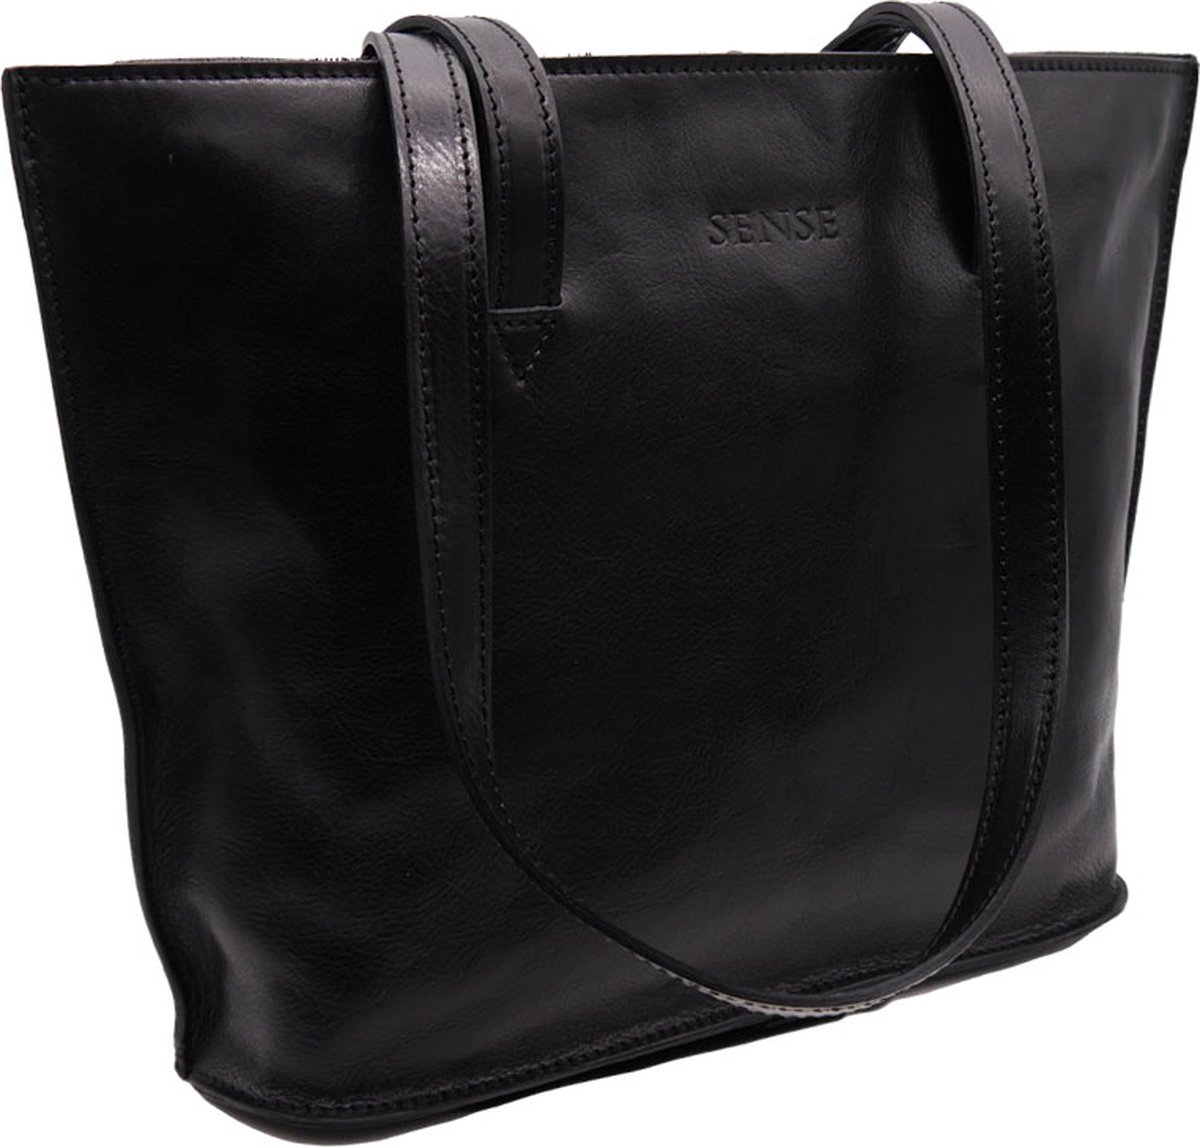 SENSE Donatella Shopper tas Zwart - Leren schoudertas - Italiaanse echte leren handtas - Alledaagse tas- Made in Italy